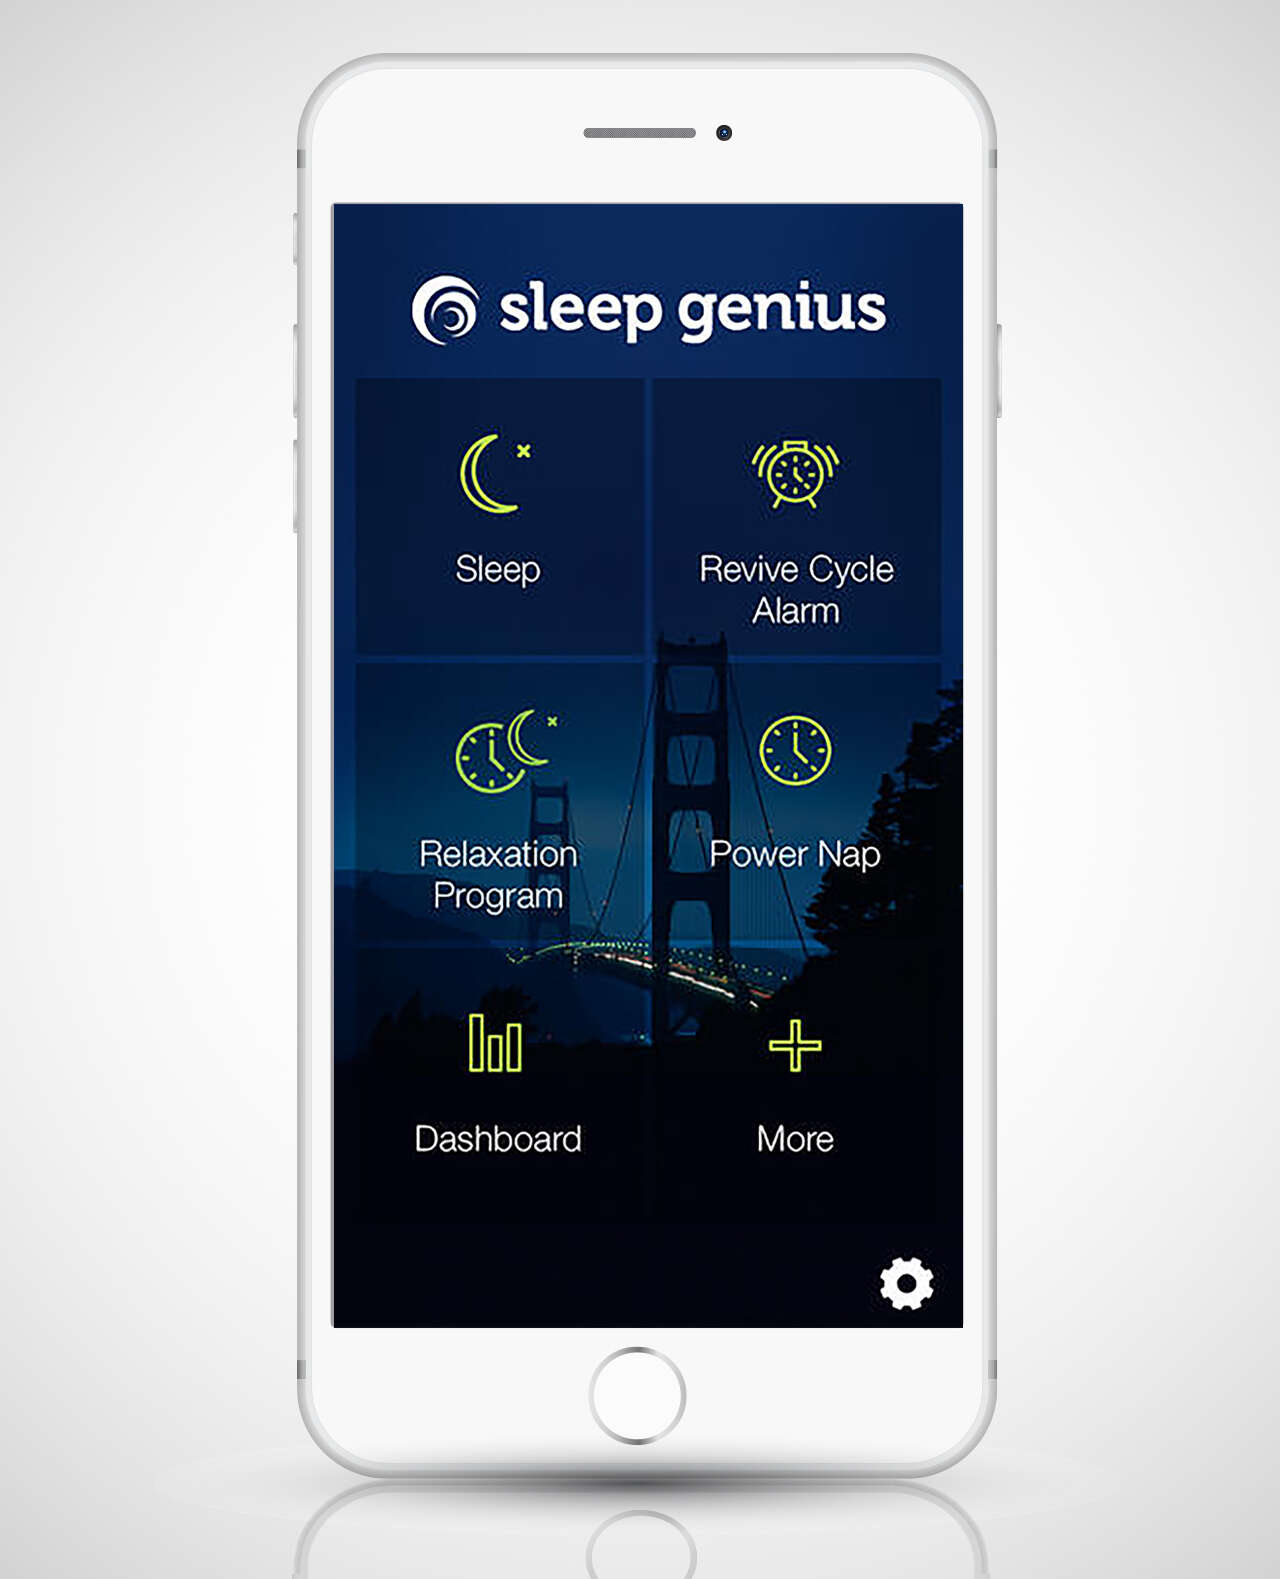 sleep genius app